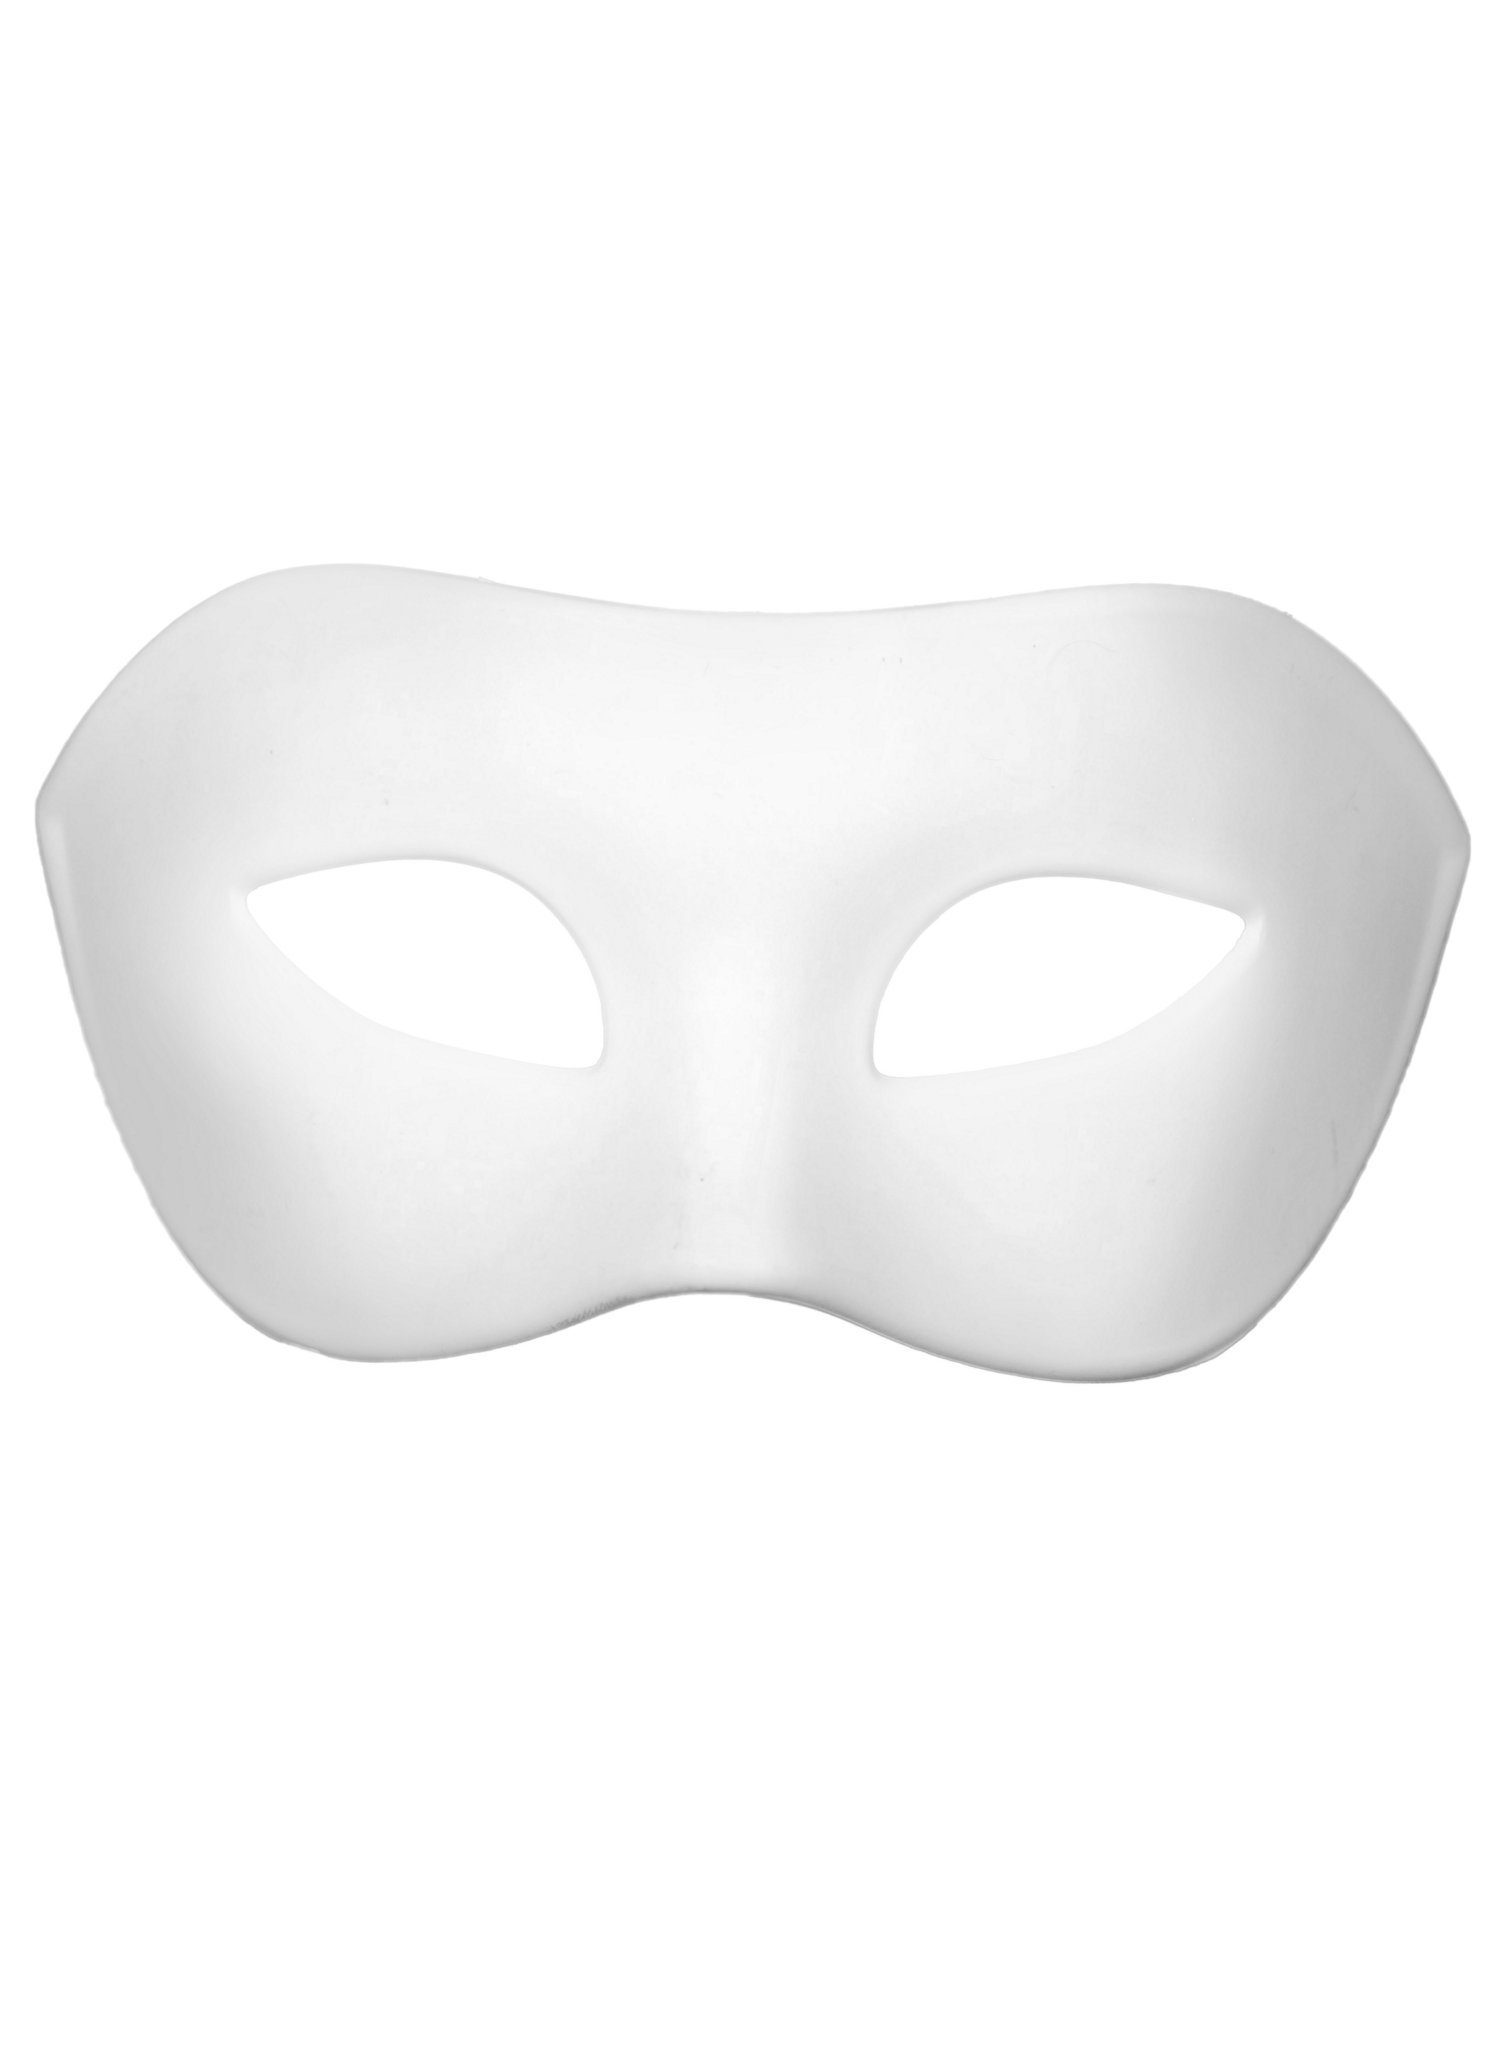 Metamorph Verkleidungsmaske Bemalbare Augenmaske, 50